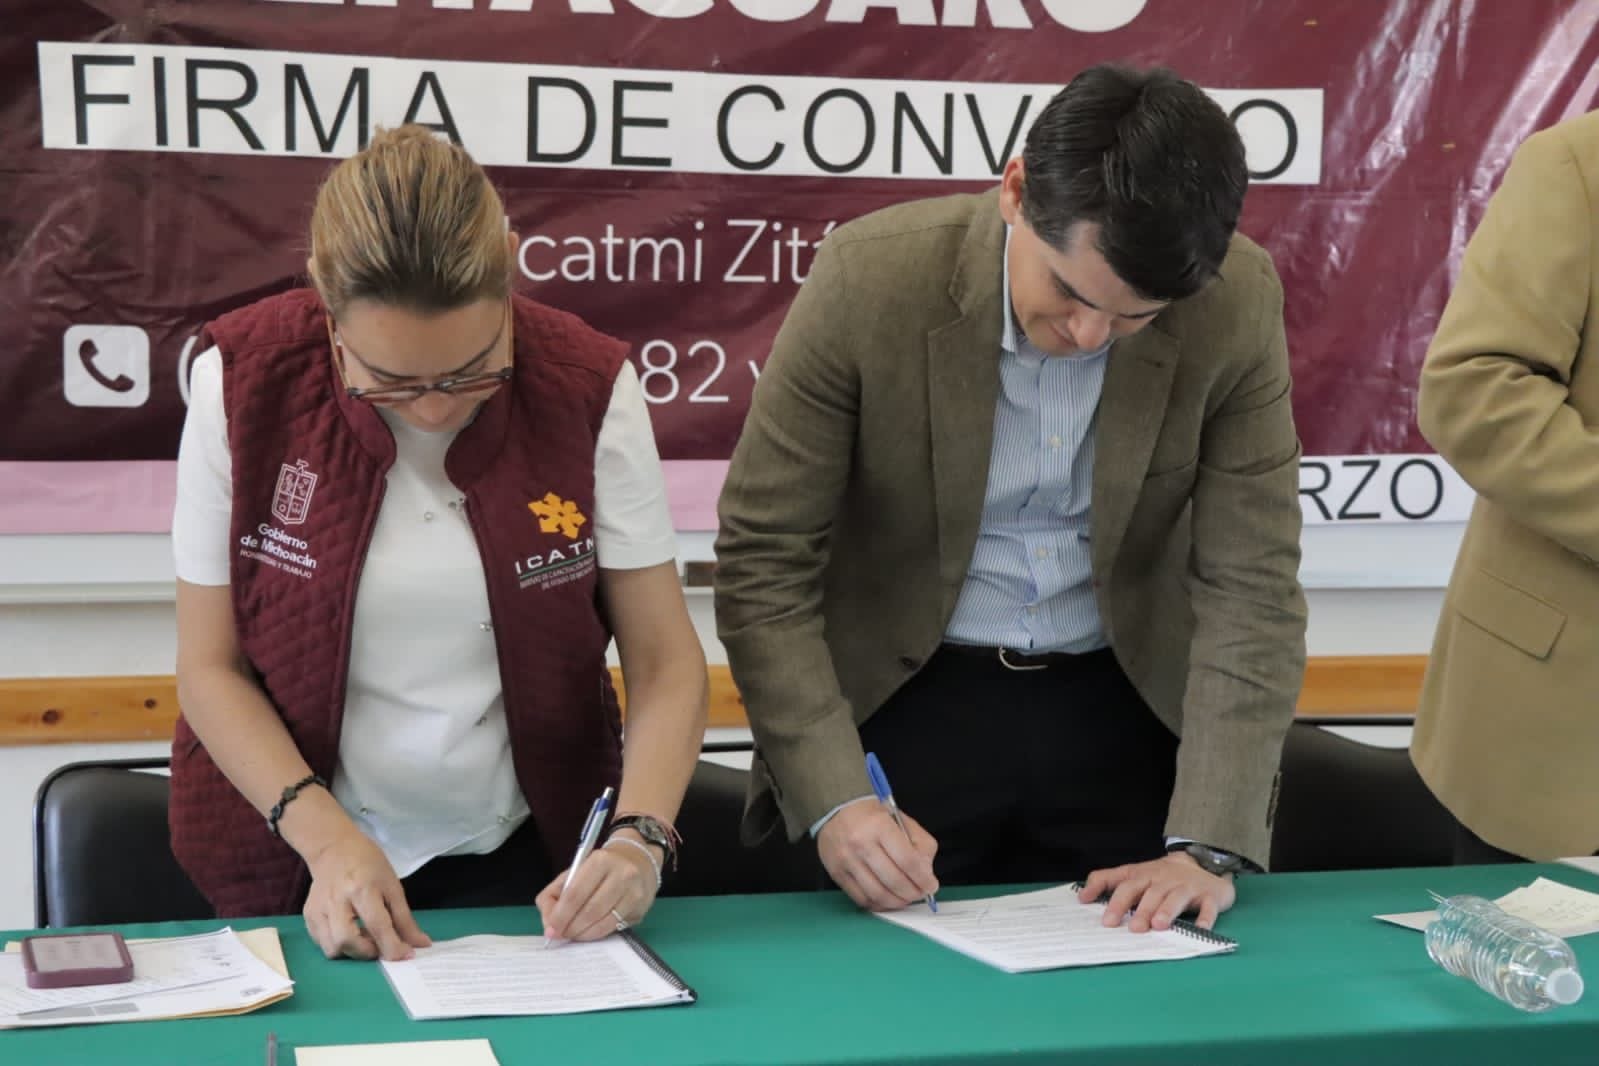 Firmamos convenio de Golaboración Interinstitucional con ICATMI